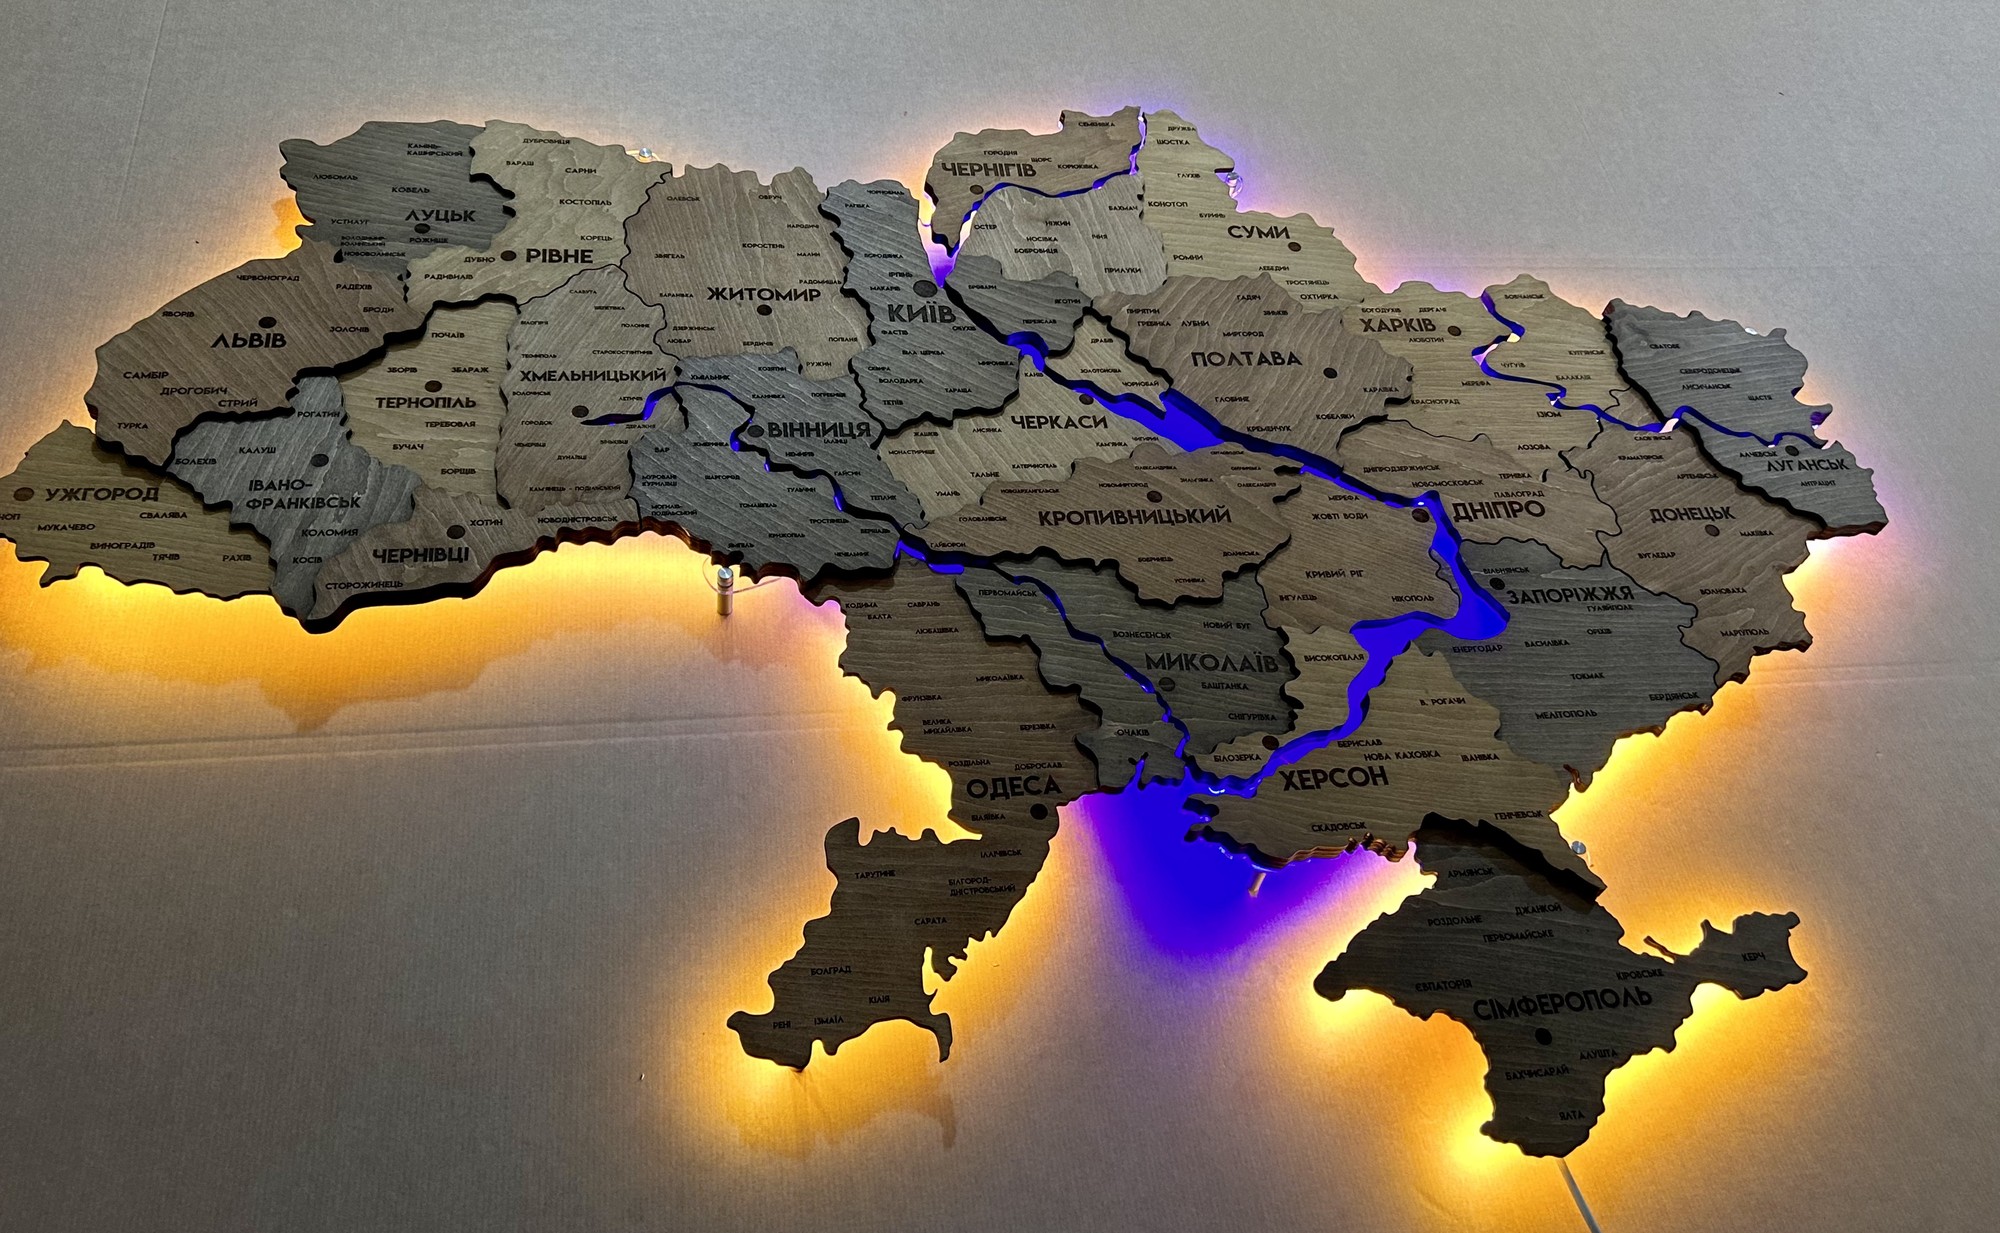 Detailed multilayer Ukraine LED map with backlighting of rivers color Helsinki 120x80 cm (47*31.4 inch)